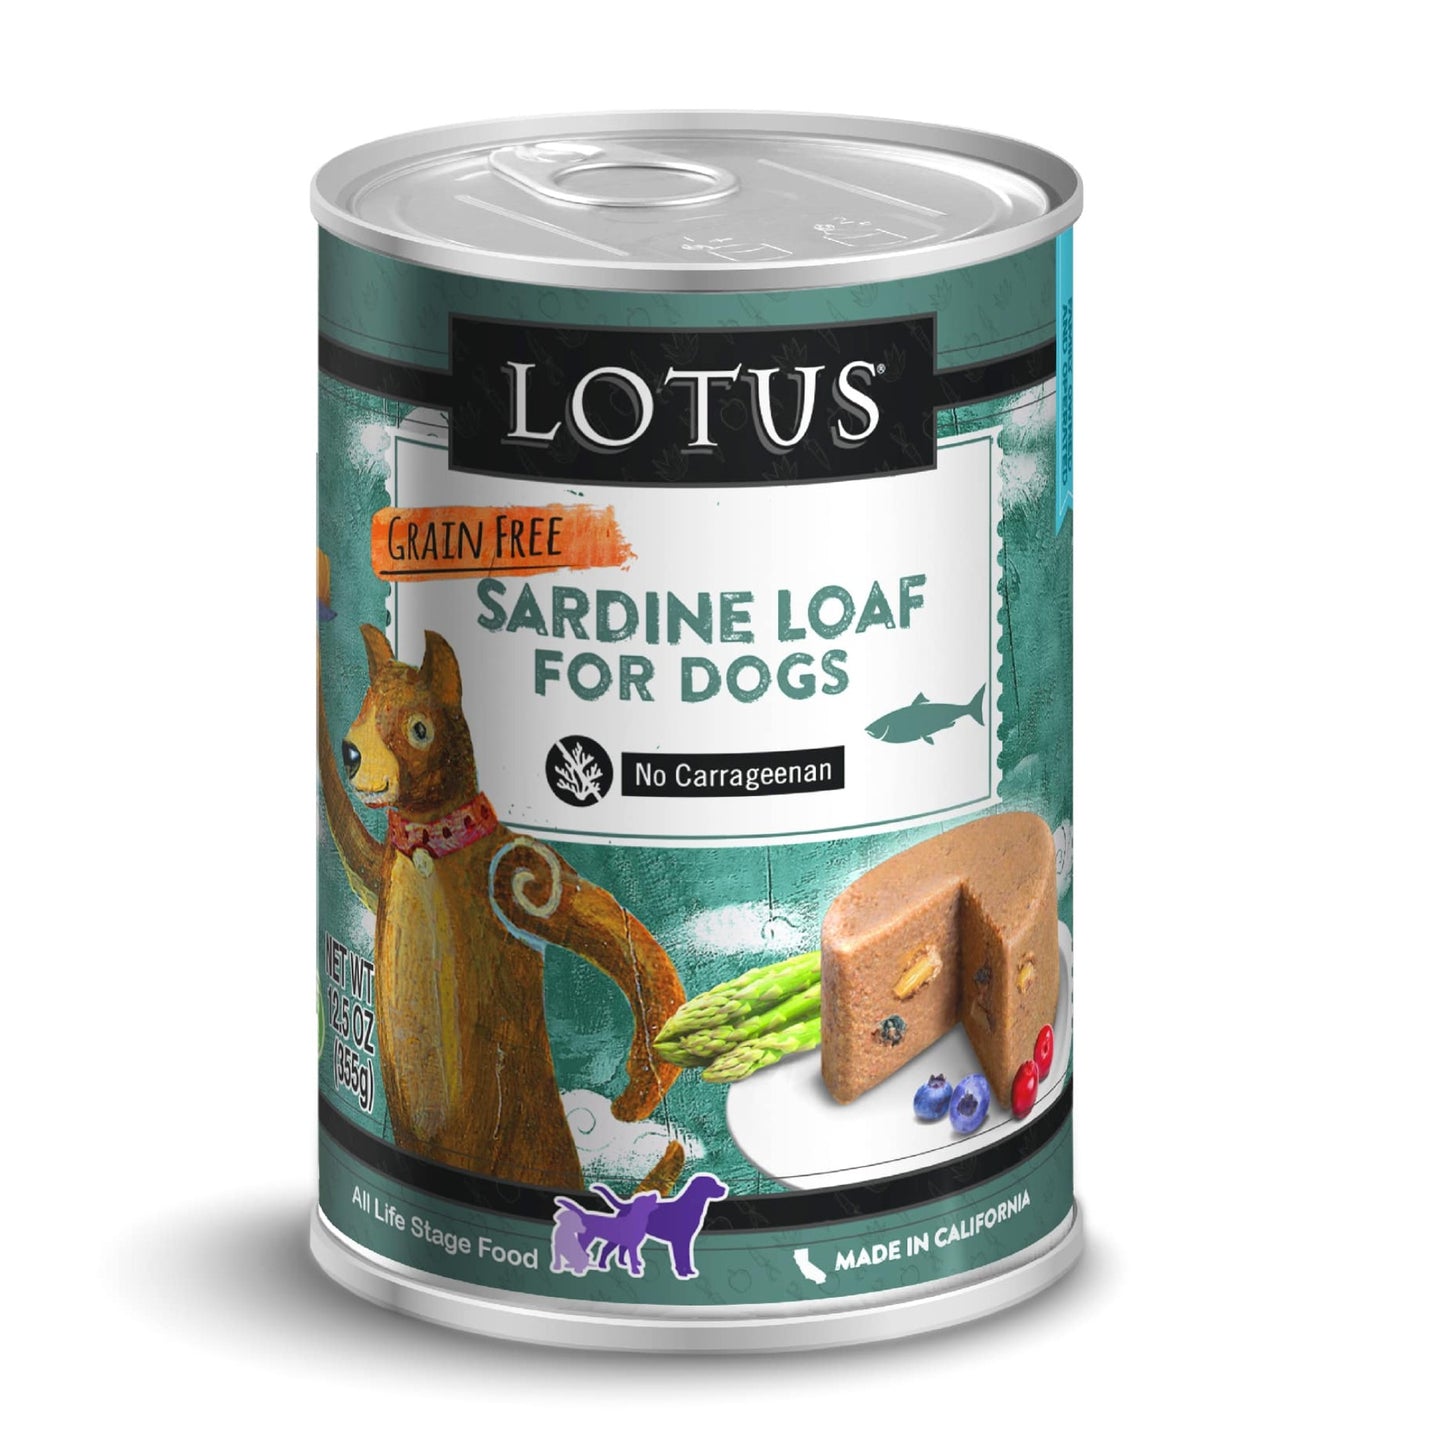 Lotus Dog Grain-Free Sardine Loaf for Dogs